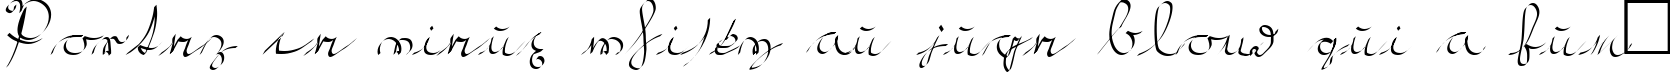 Пример написания шрифтом Kroeburn Regular текста на французском